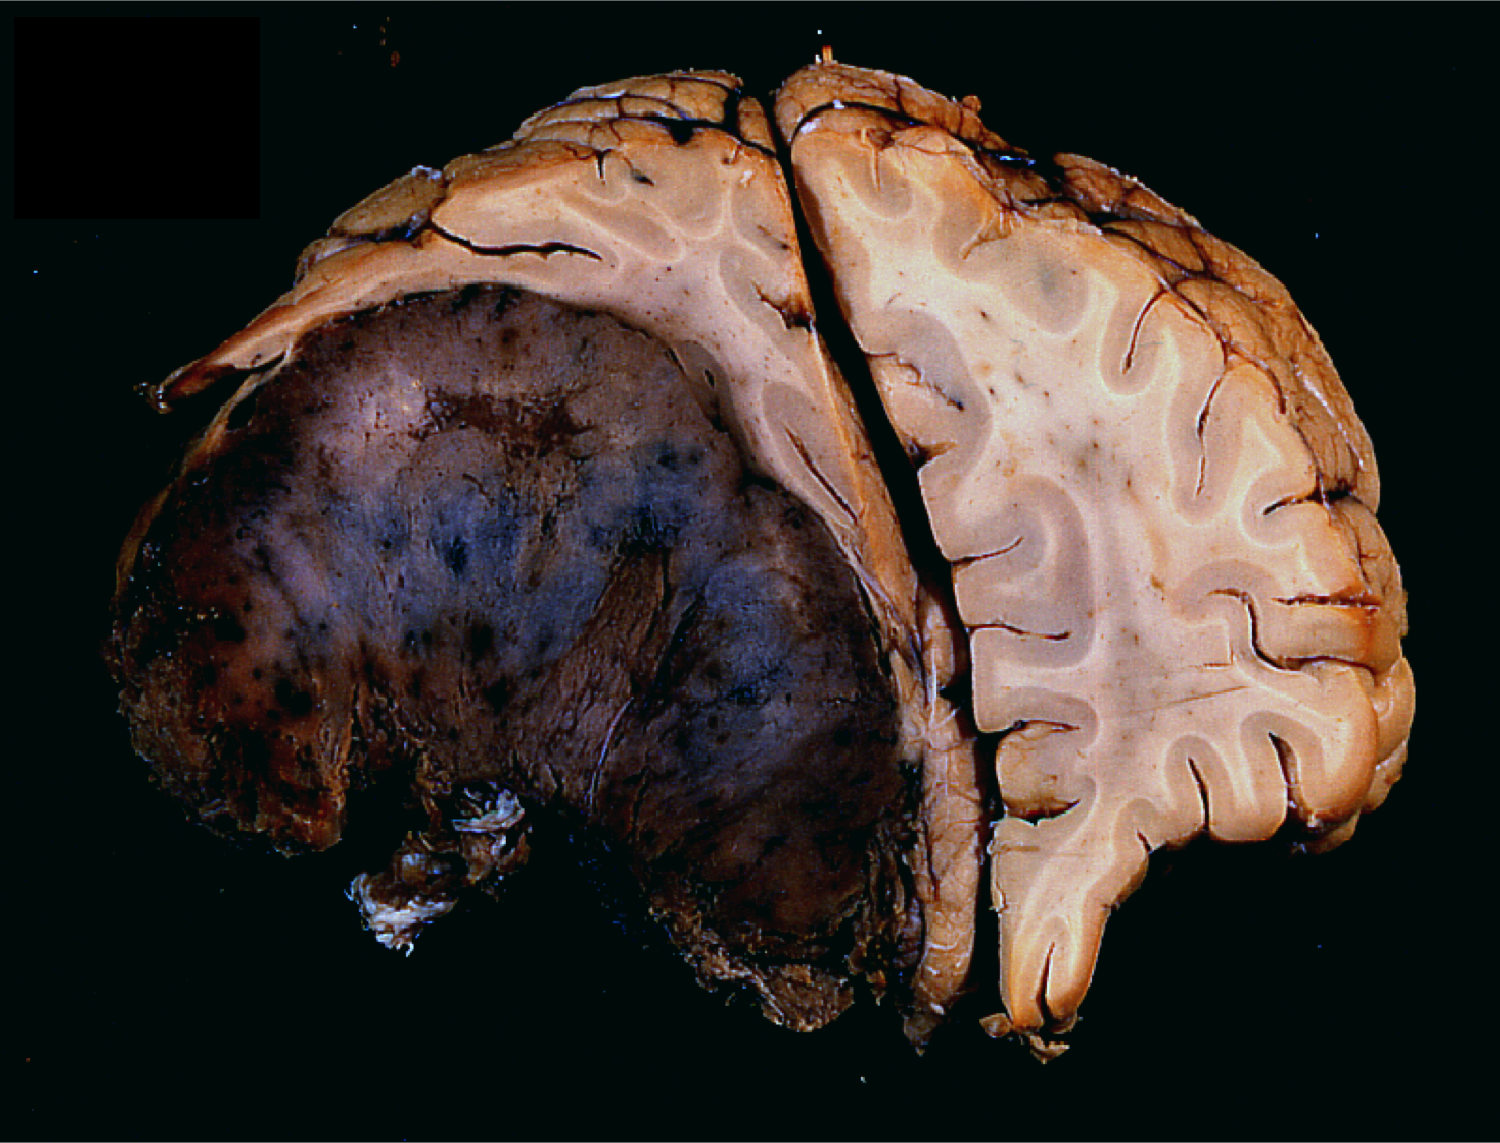 Massive orbitofrontal meningioma